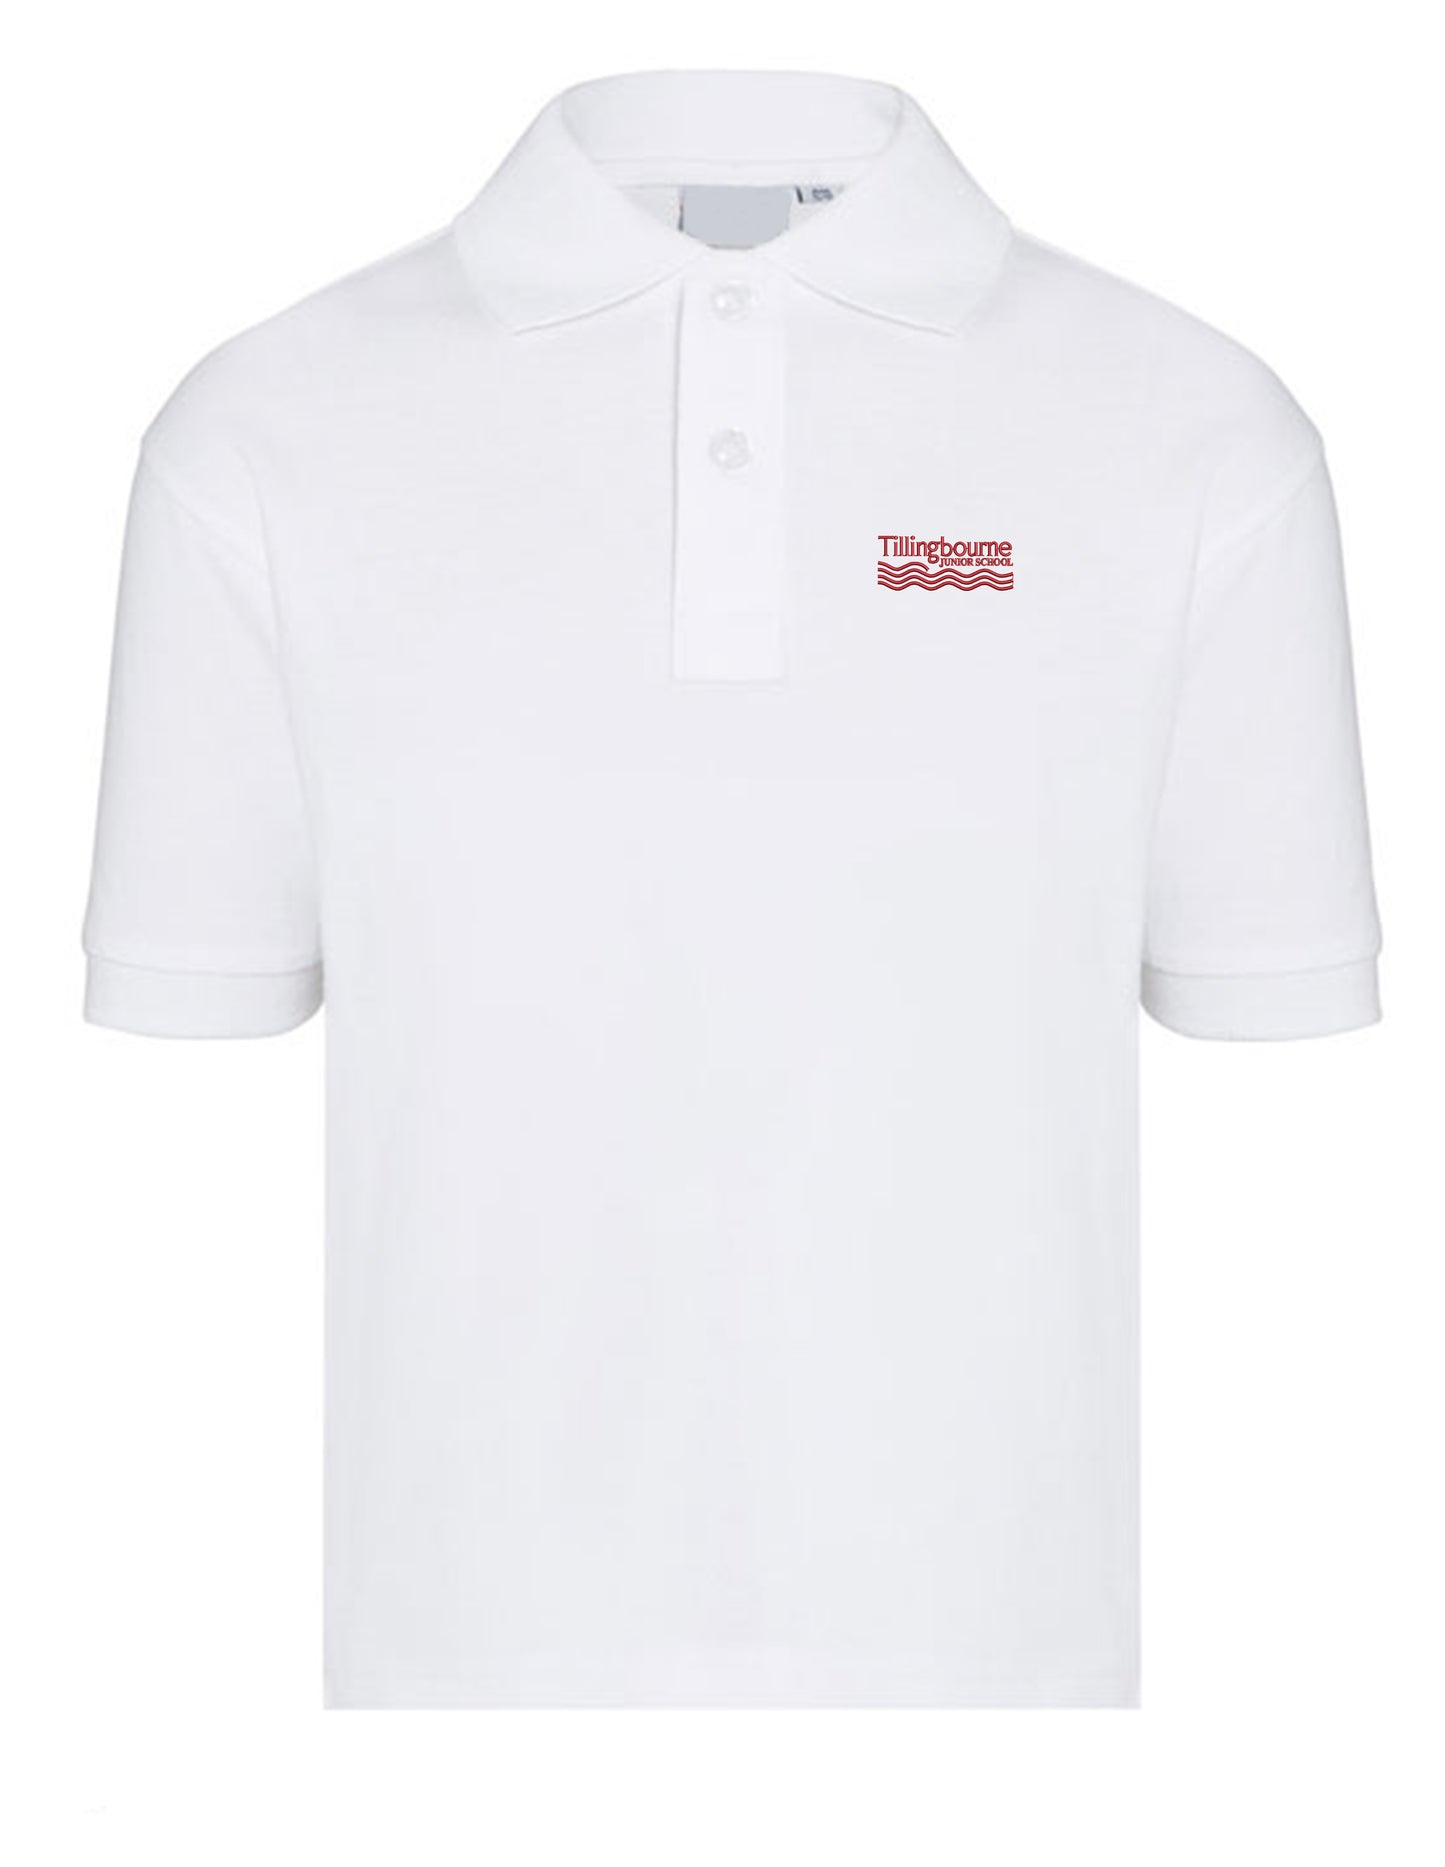 Tillingbourne Junior School - Polo Shirt